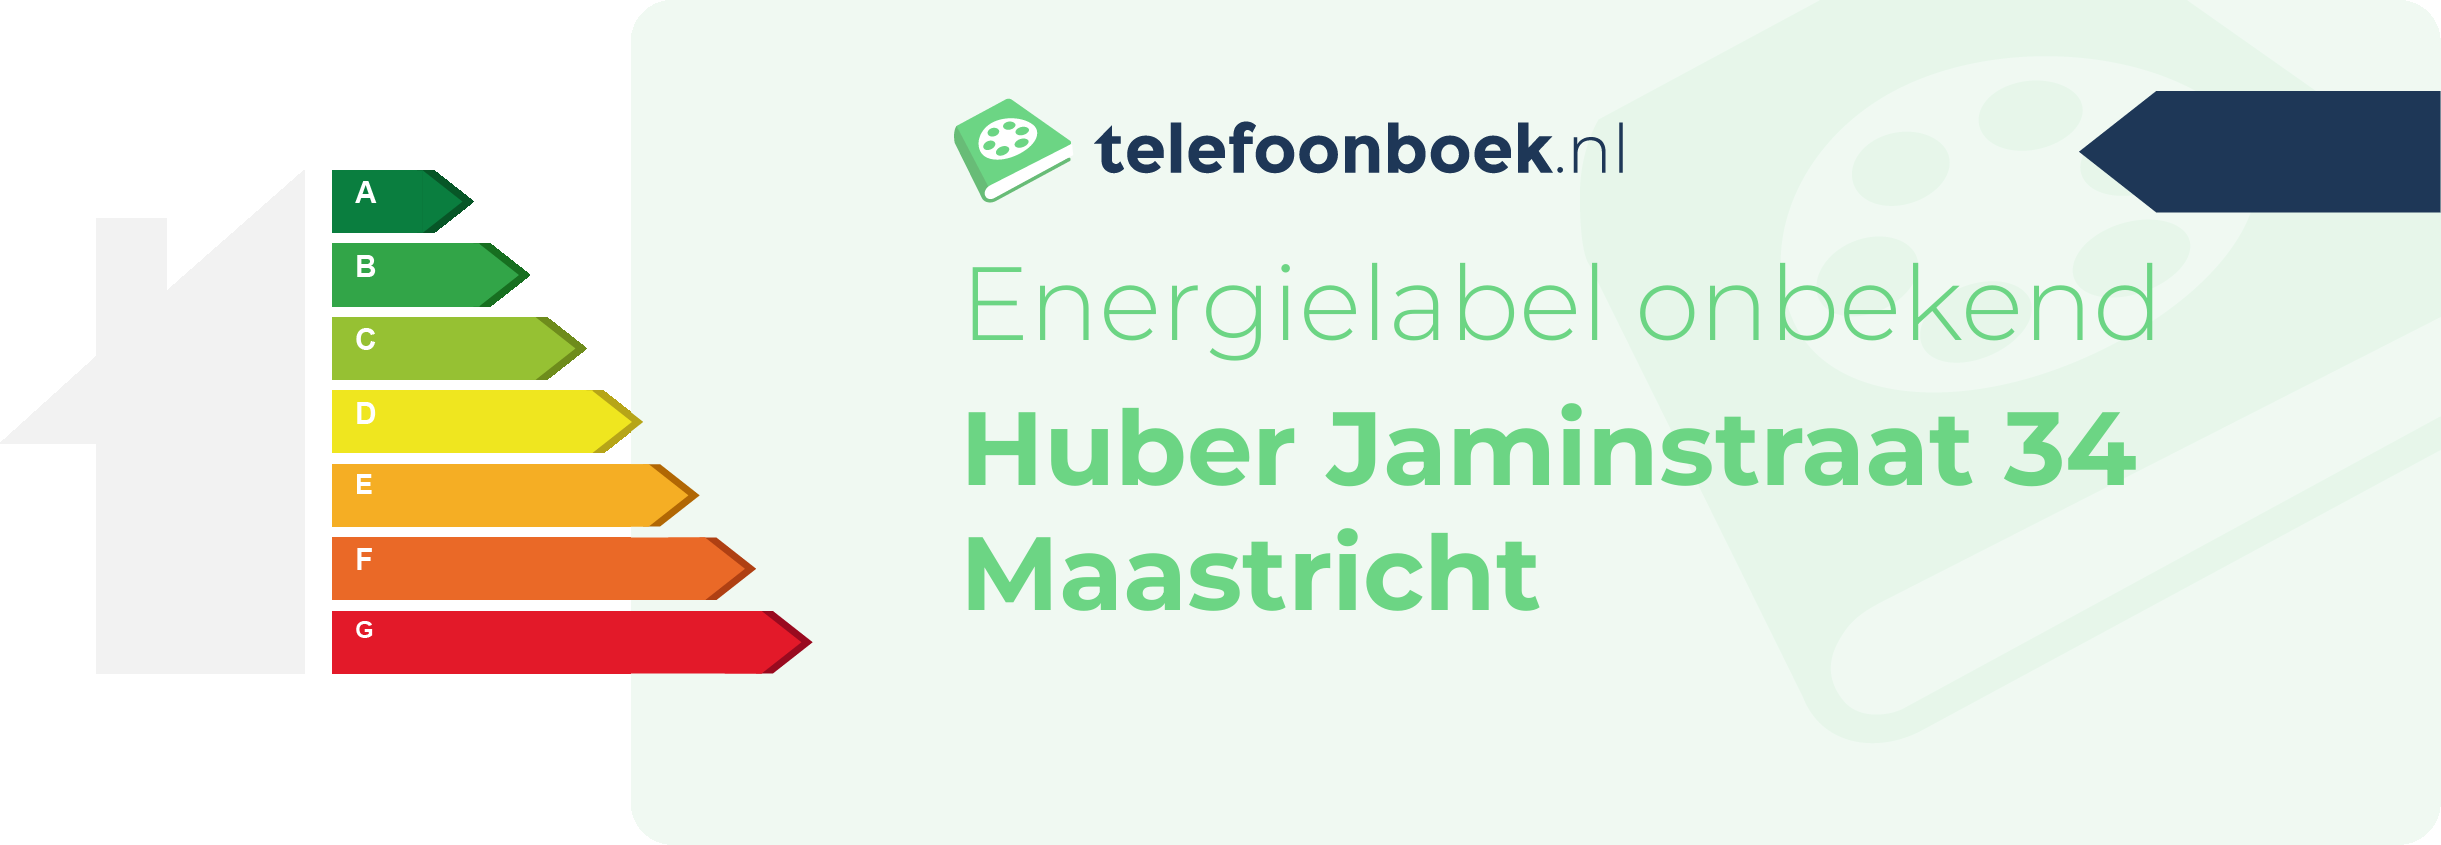 Energielabel Huber Jaminstraat 34 Maastricht